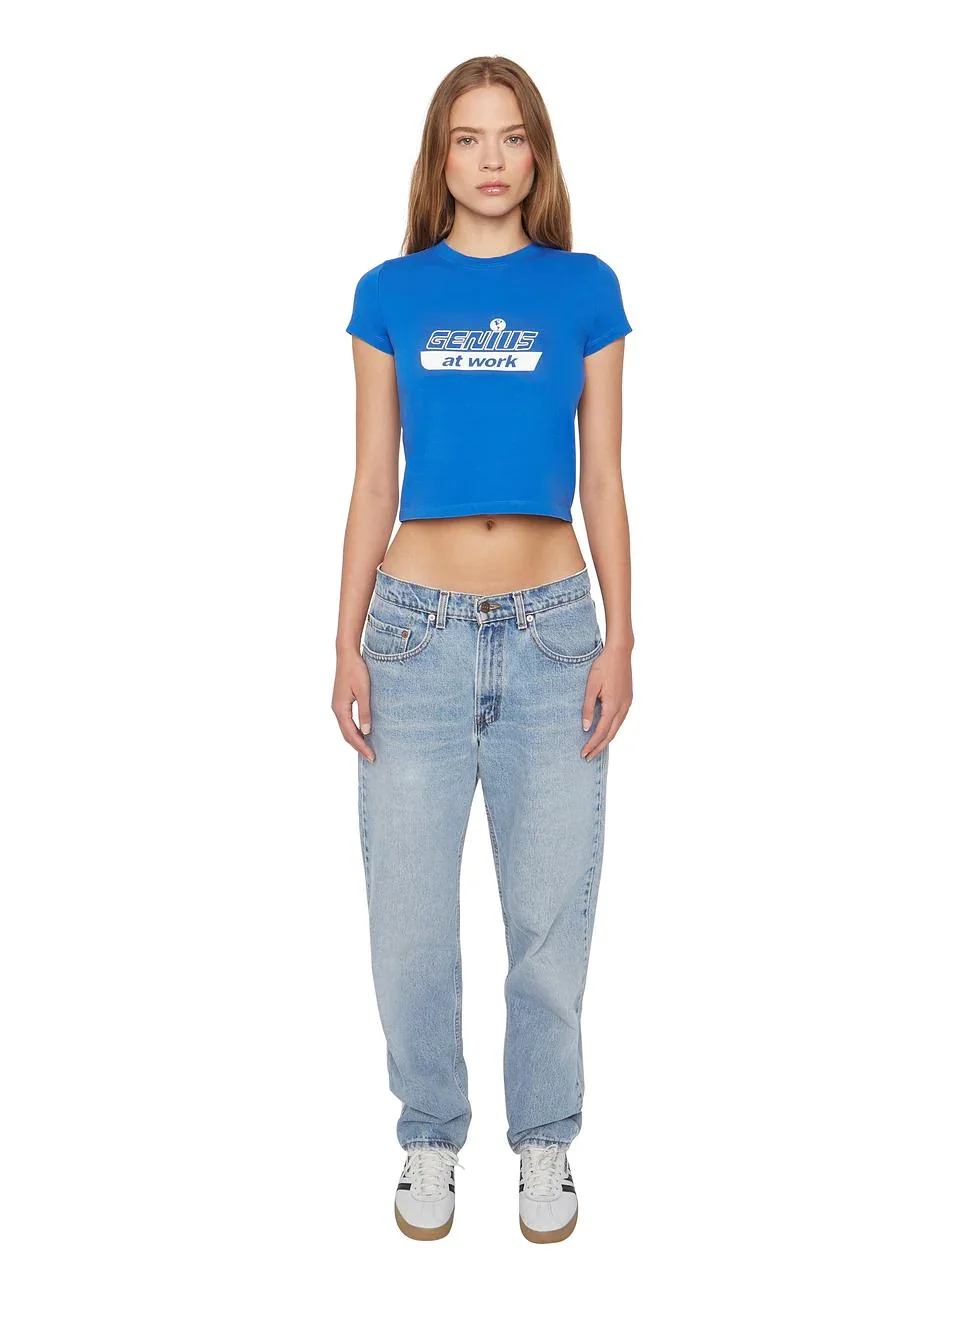 Guizio Women's Genius Printed T-Shirt - Blue - Size Xxs